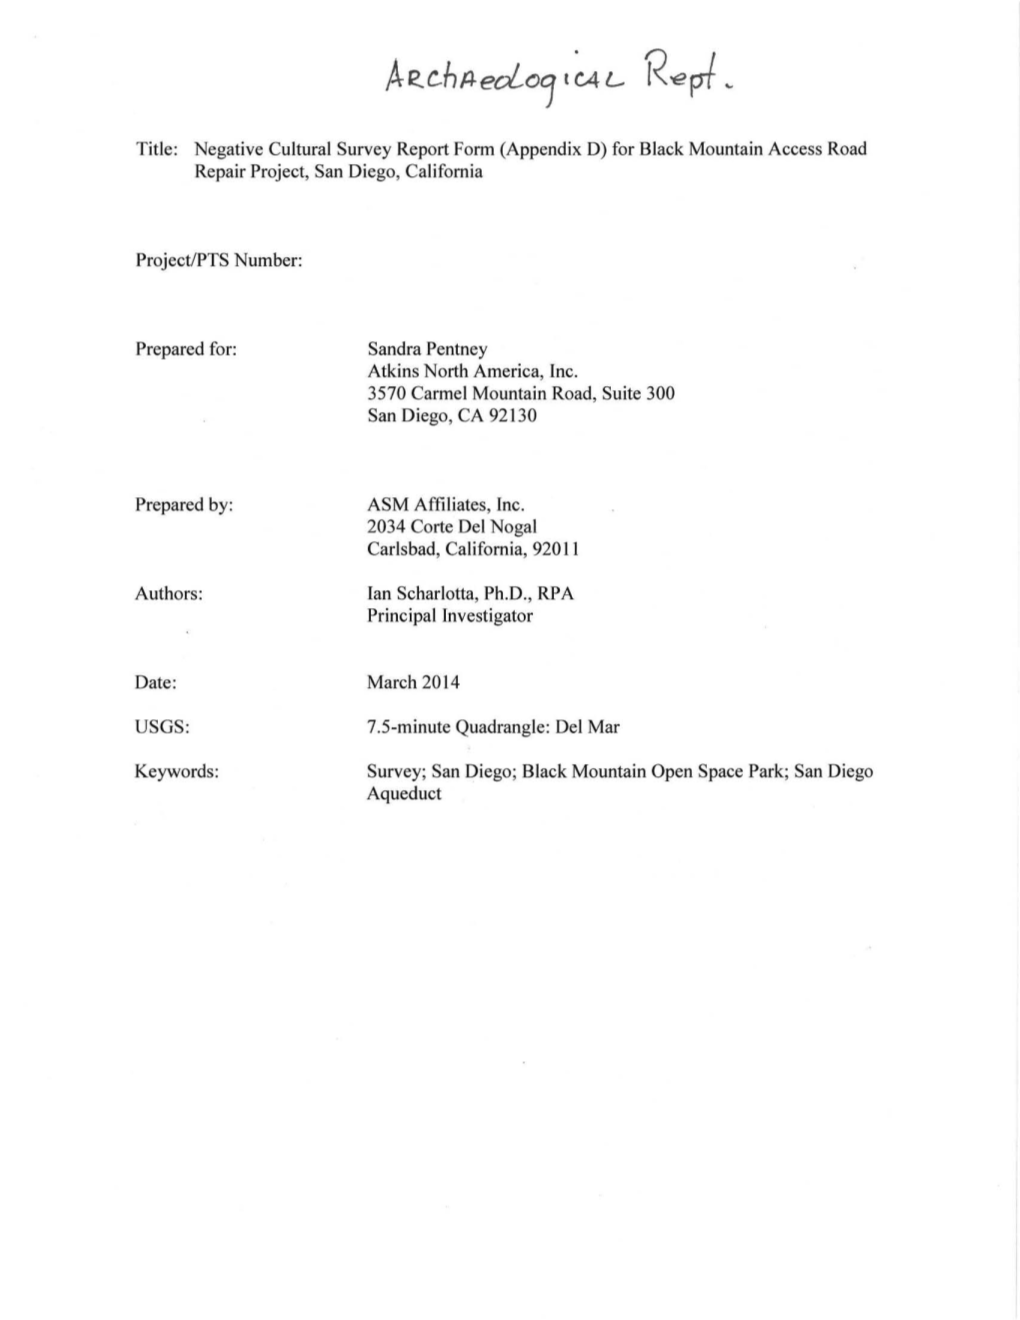 Negative Cultural Survey Report Form (Appendix D) for Black Mountain Access Road Repair Project, San Diego, California Pr